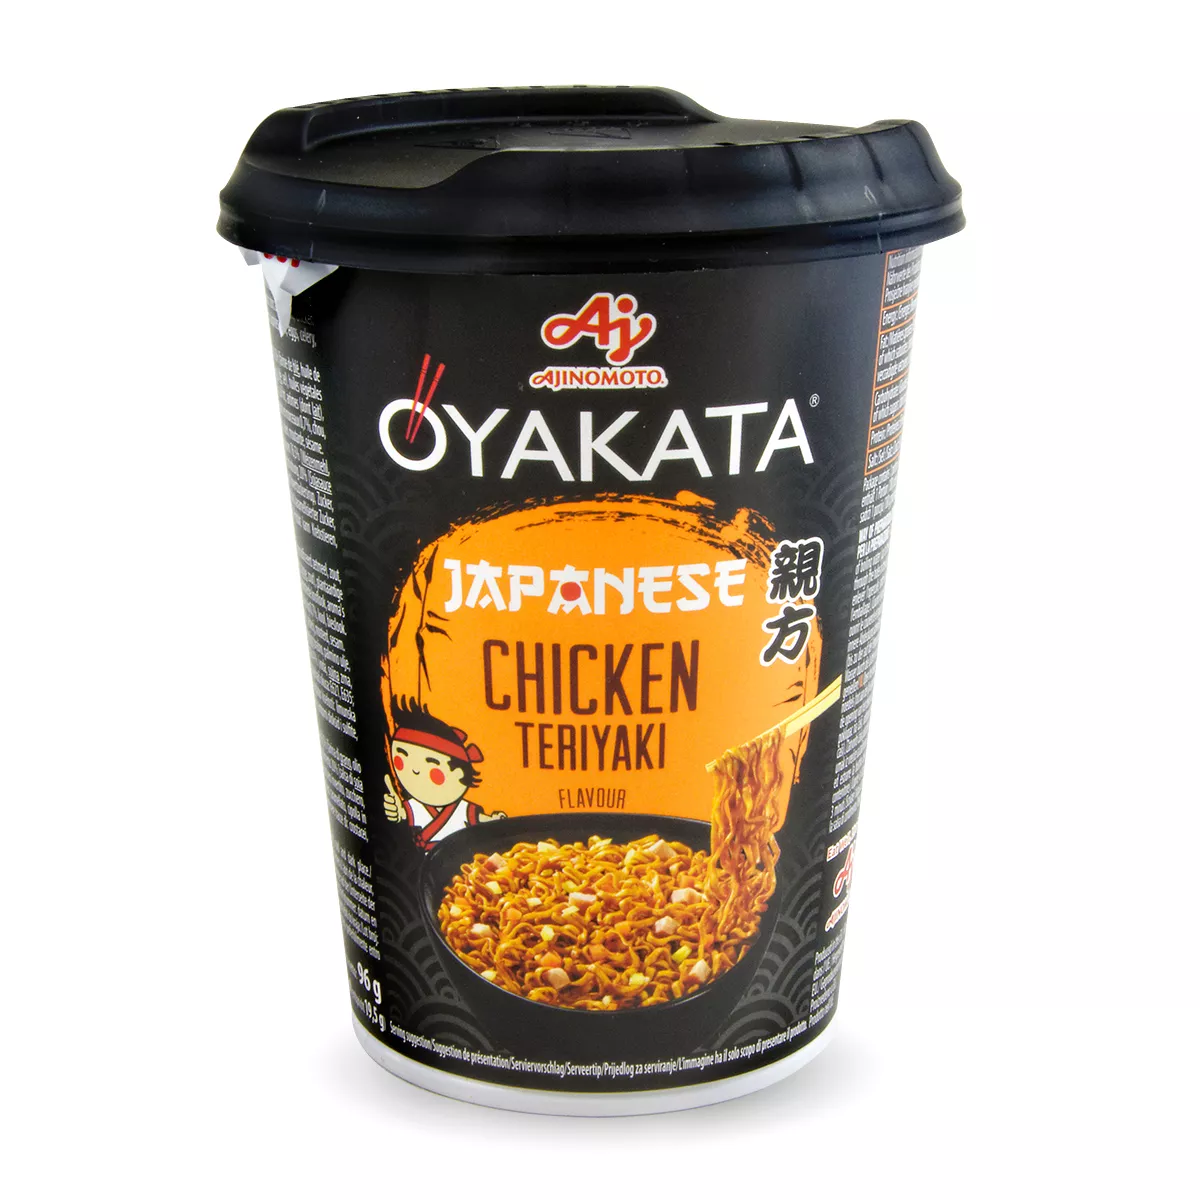 Taitei instant Chicken Teriyaki Flavour CUP OYAKATA 96g, [],asianfood.ro